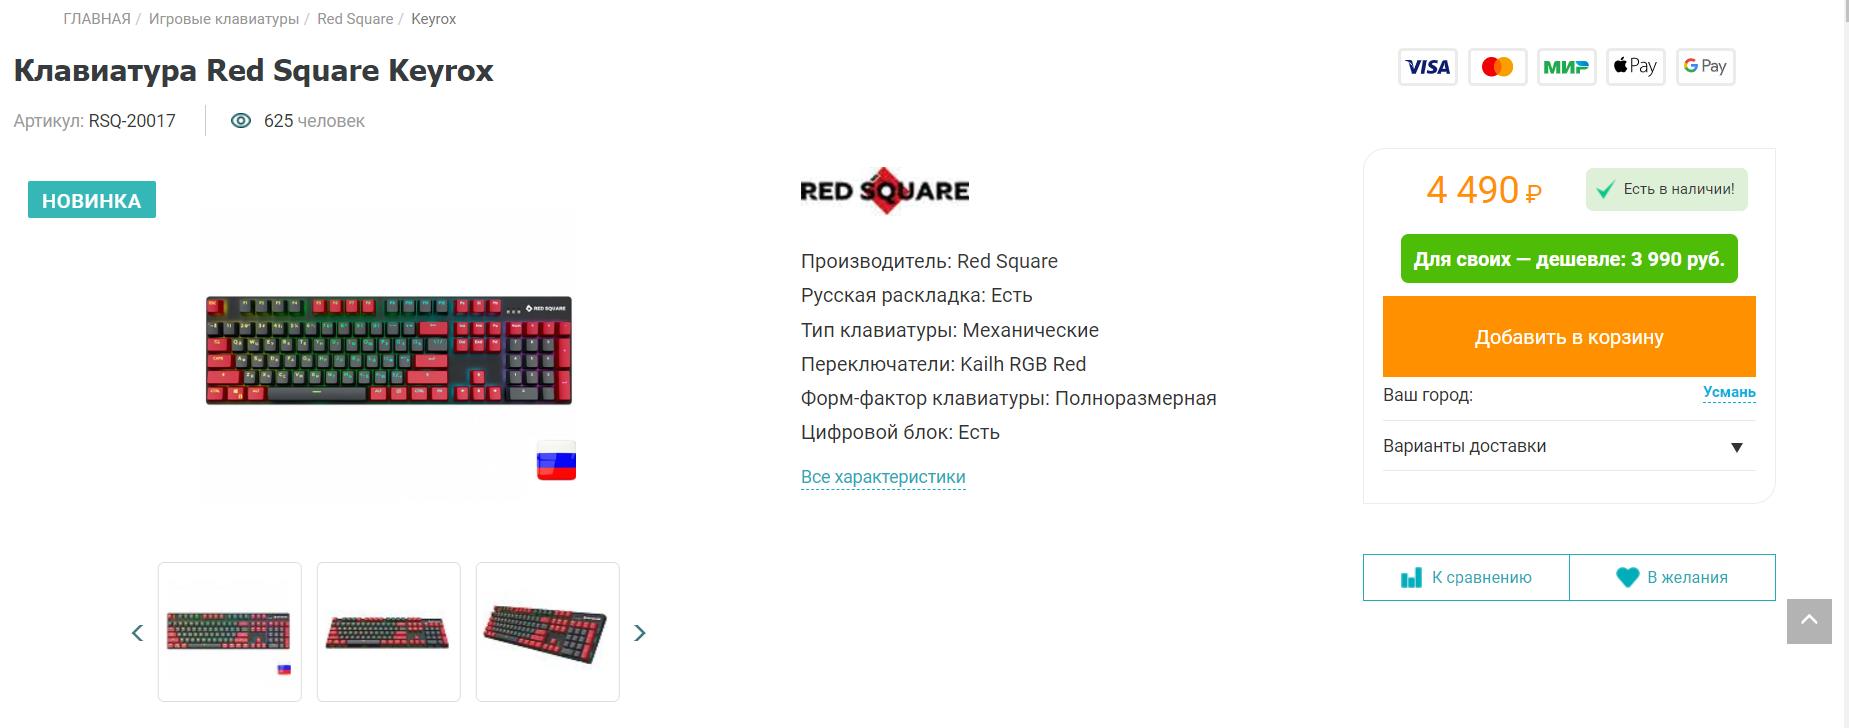 Red Square Keyrox - характеристики и стоимость